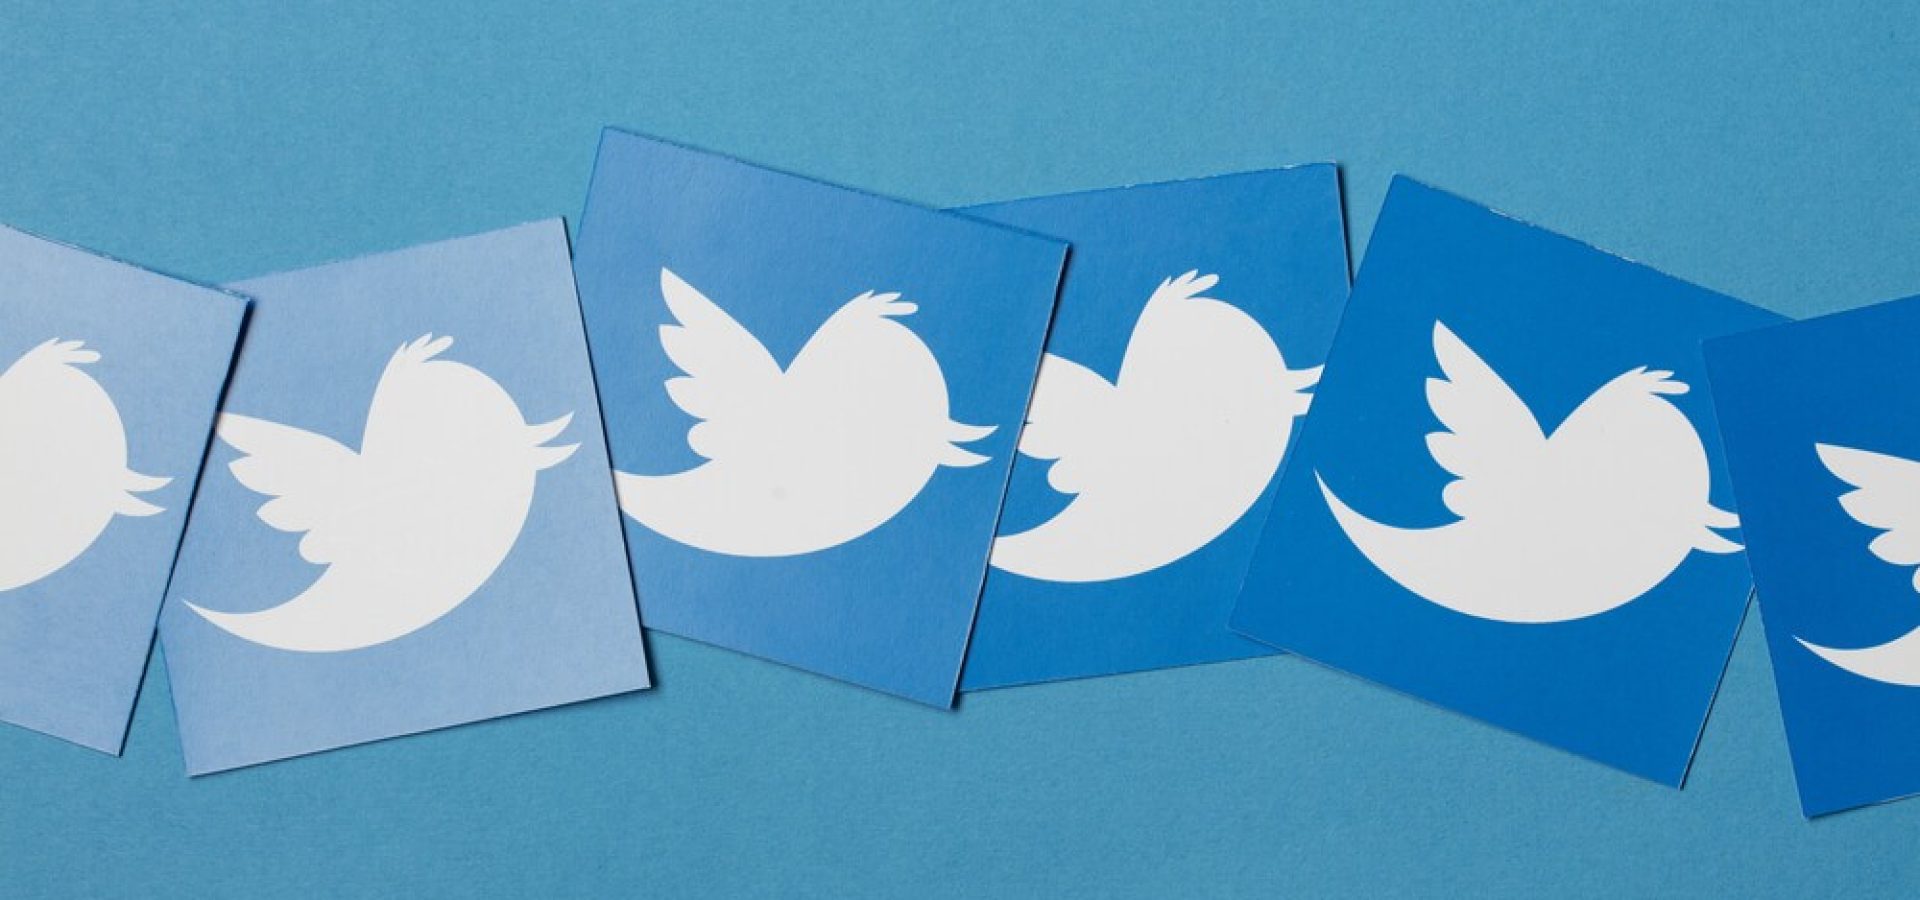 Twitter: Twitter logo printed onto paper.